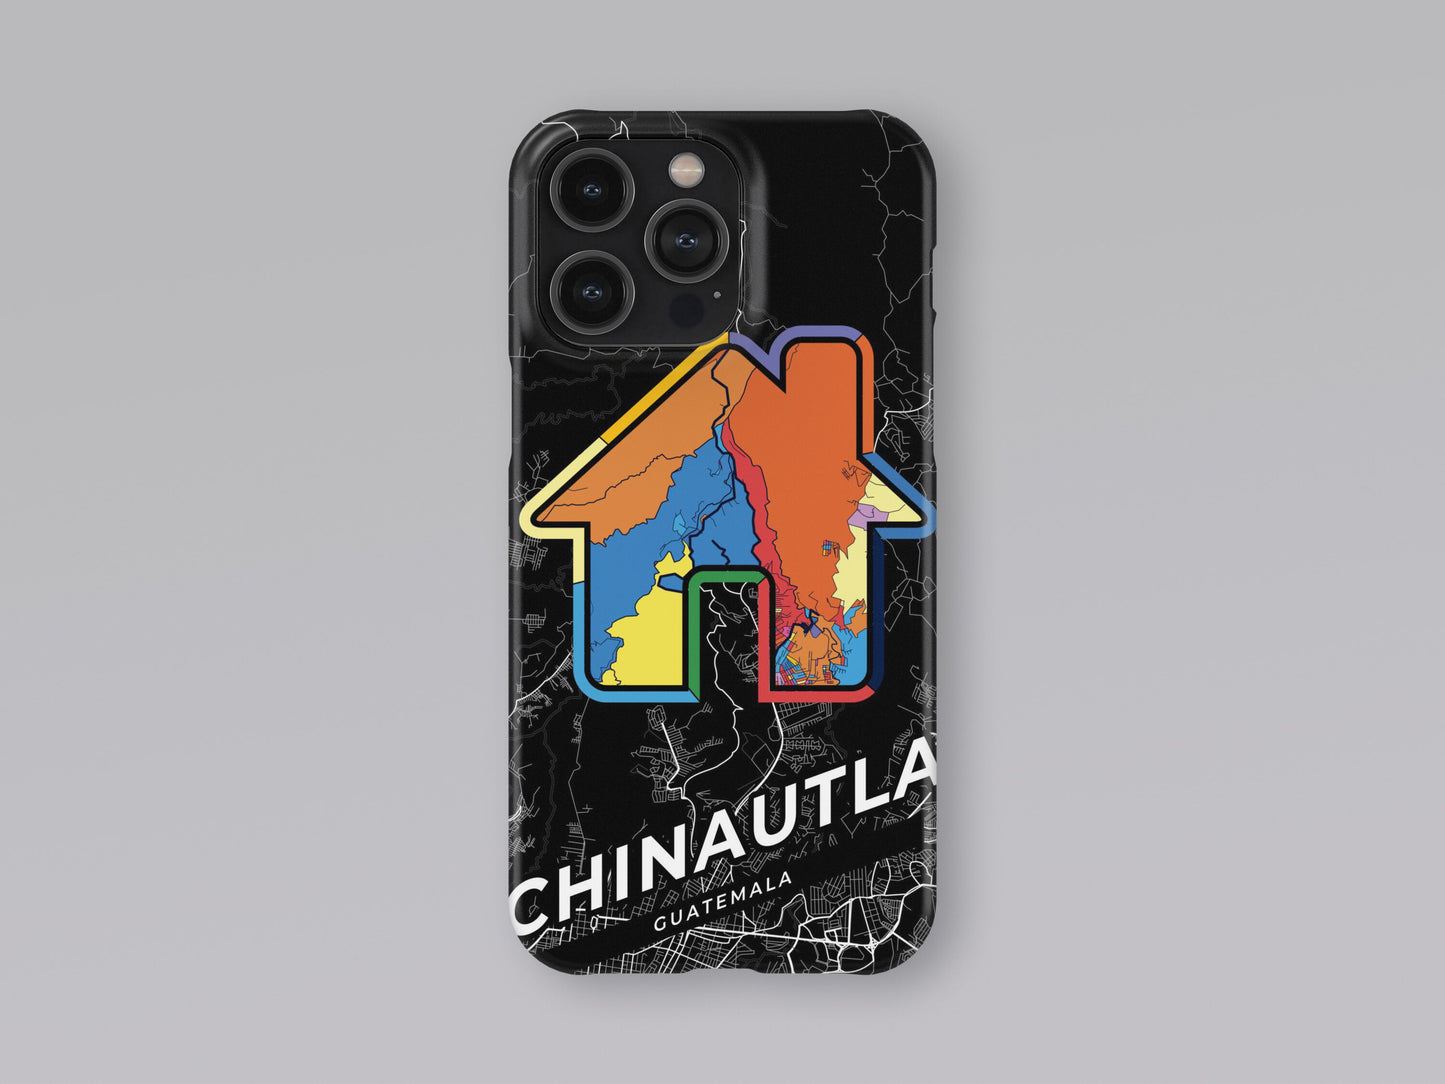 Chinautla Guatemala slim phone case with colorful icon. Birthday, wedding or housewarming gift. Couple match cases. 3